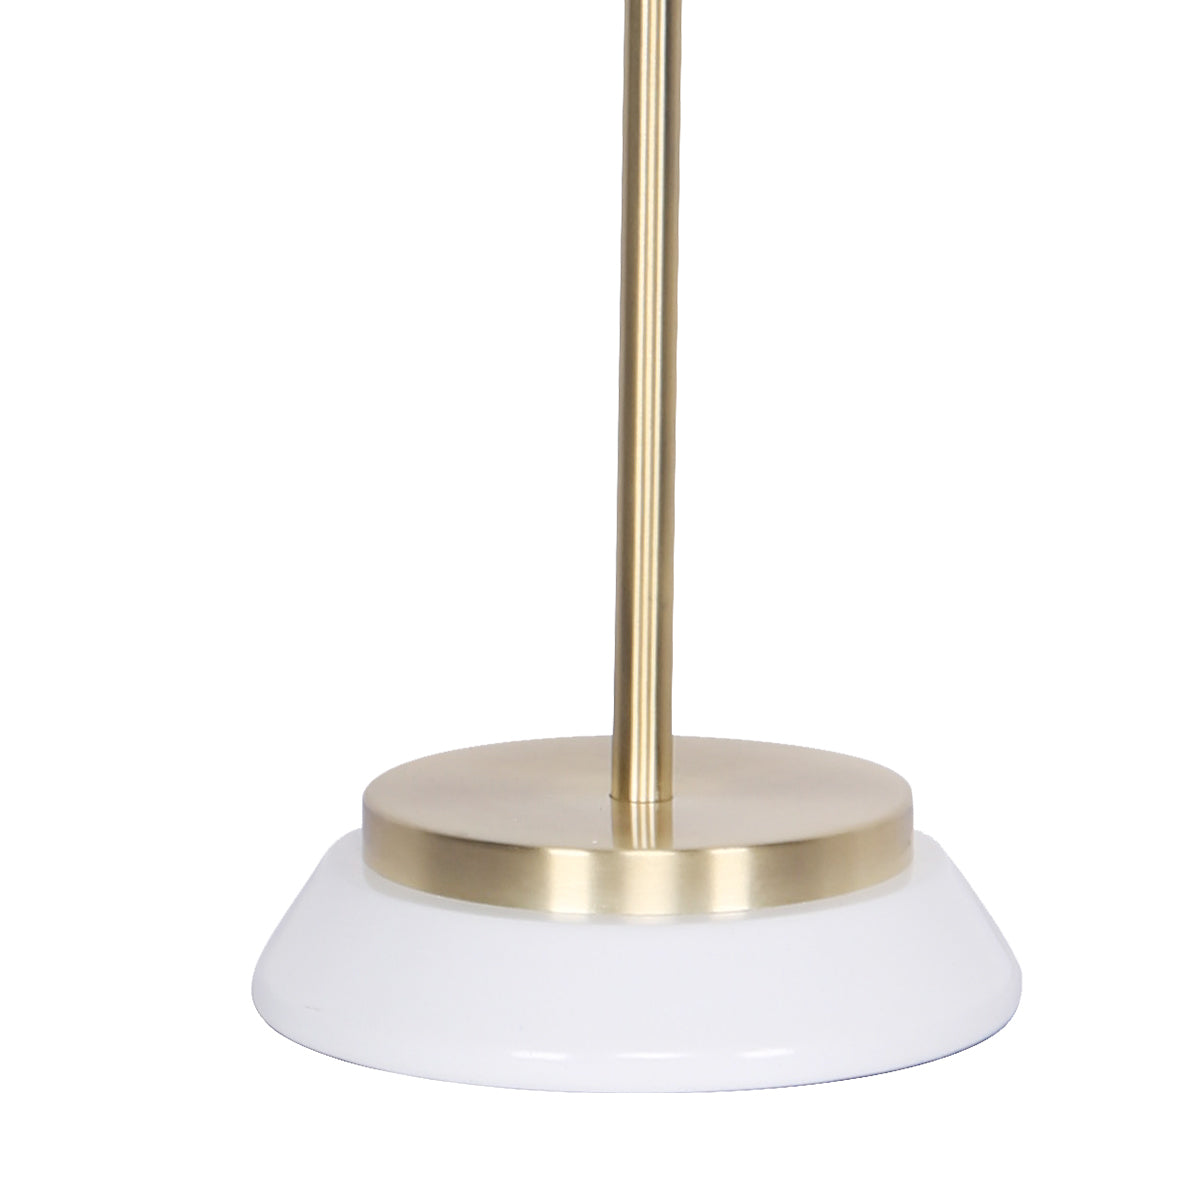 Sarantino Electric Reading Light Table Lamp Brass Finish - White - BM House & Garden